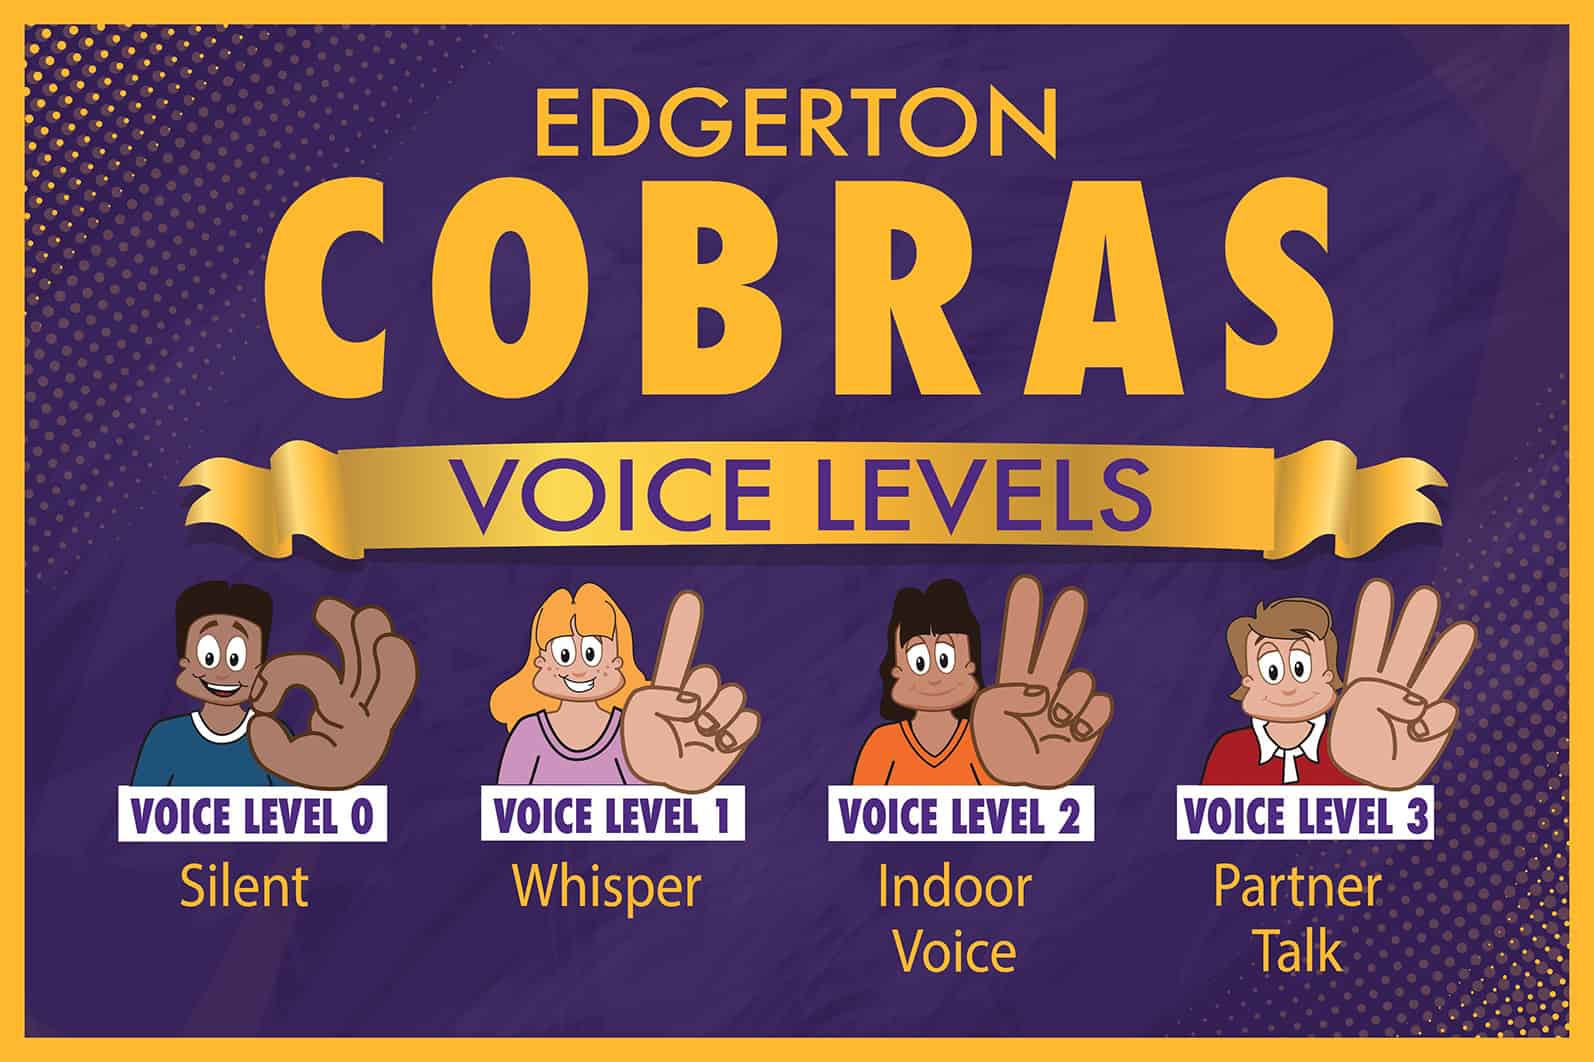 Voice-levels-cobra